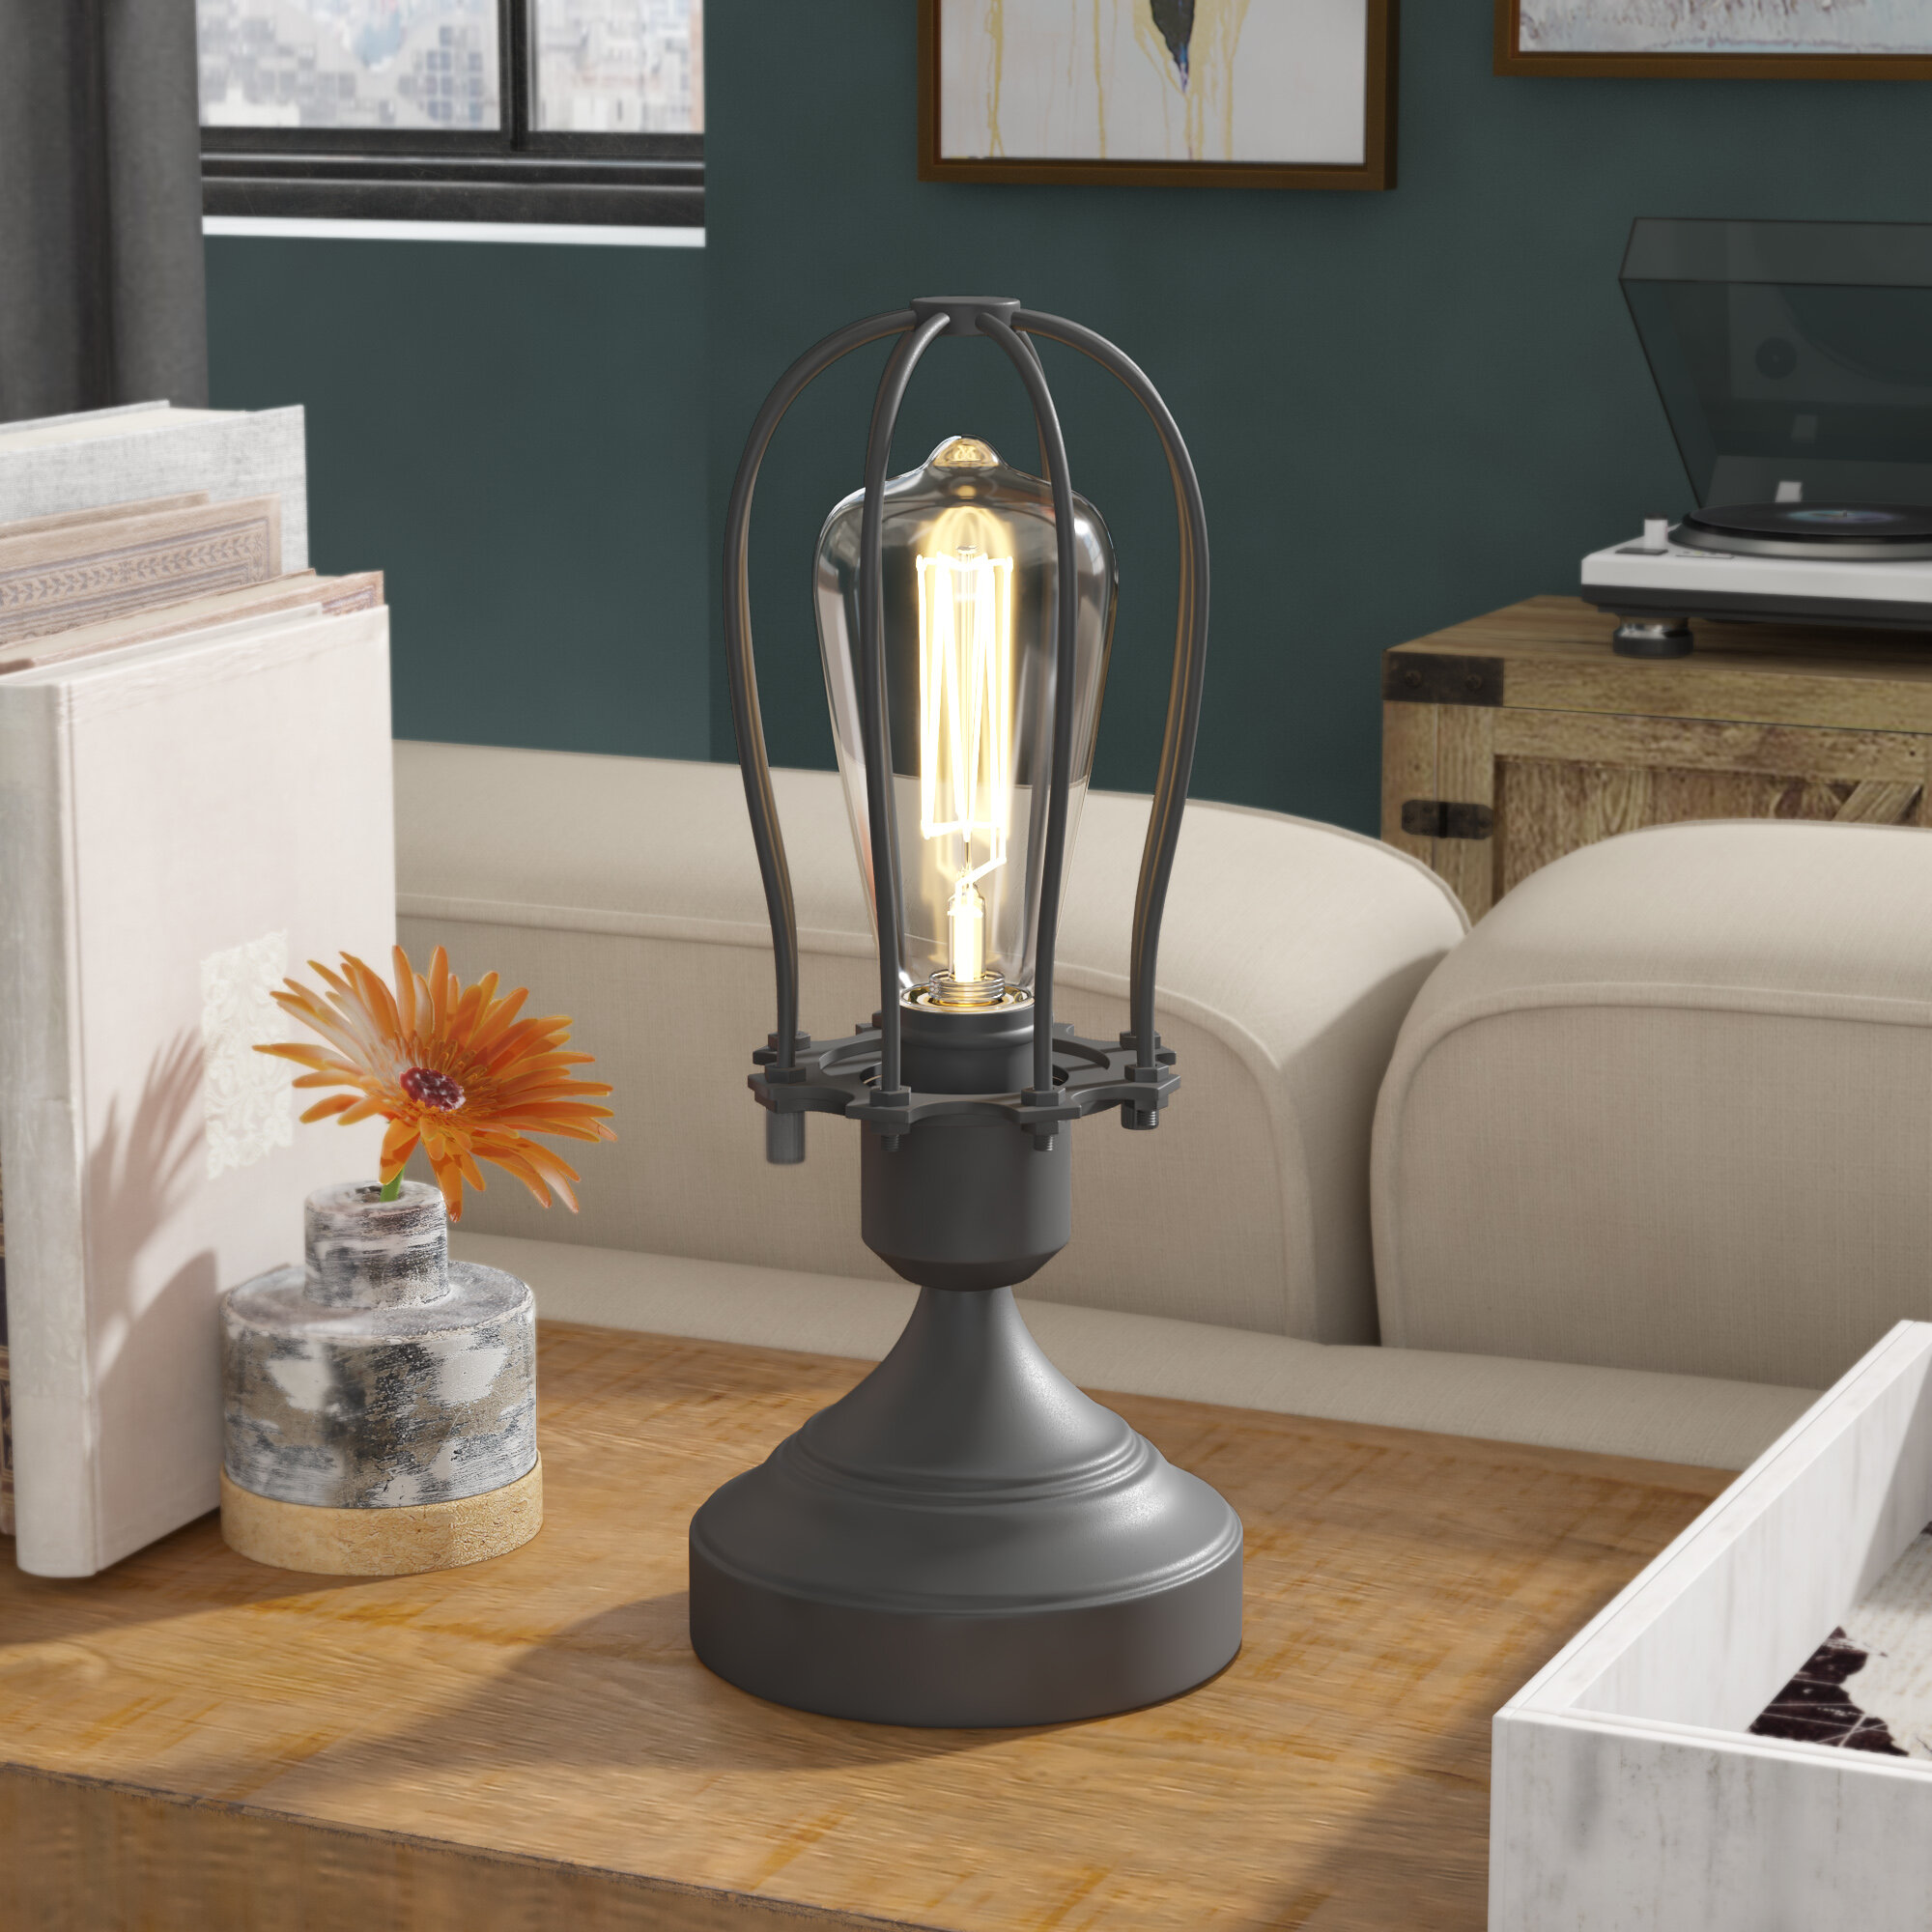 Mini Lamps You'll Love in 2020